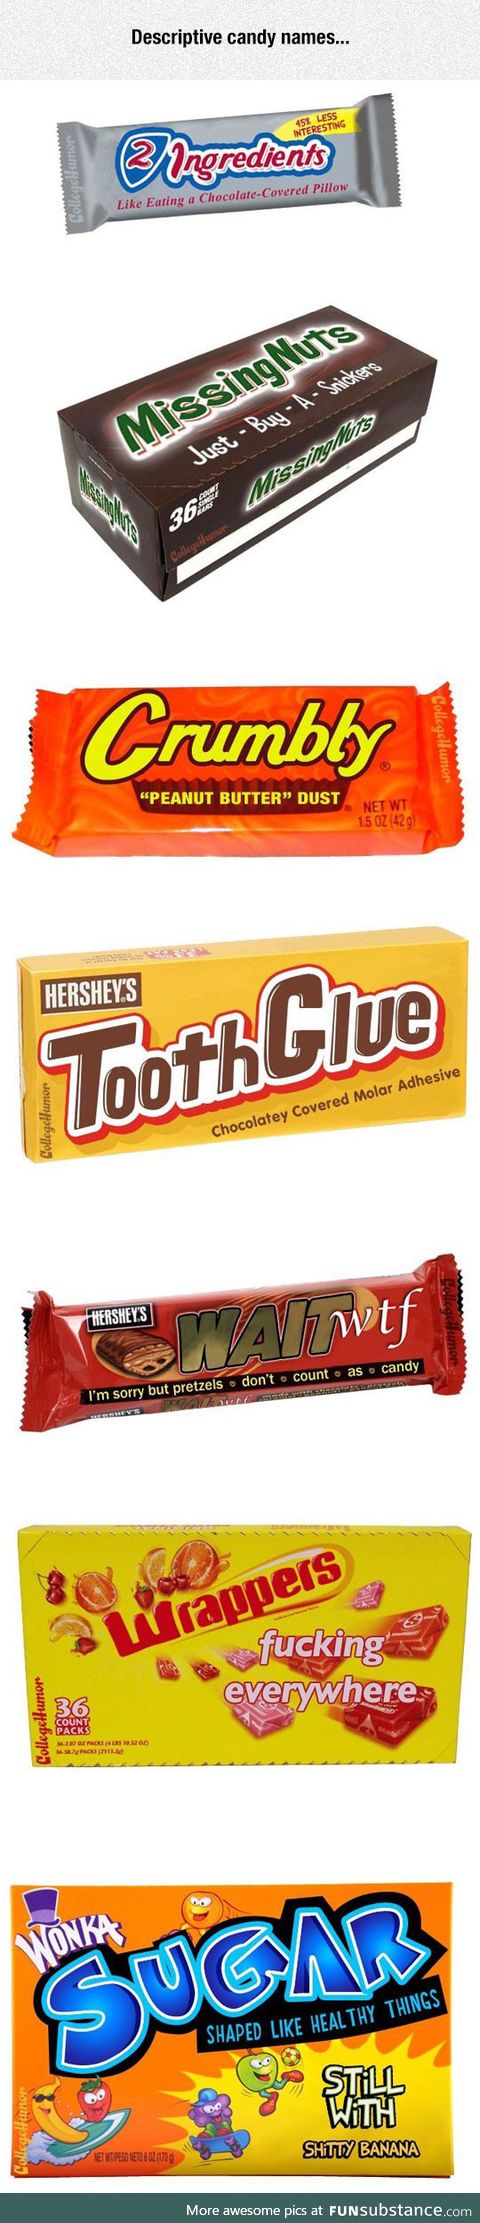 If candy had descriptive names